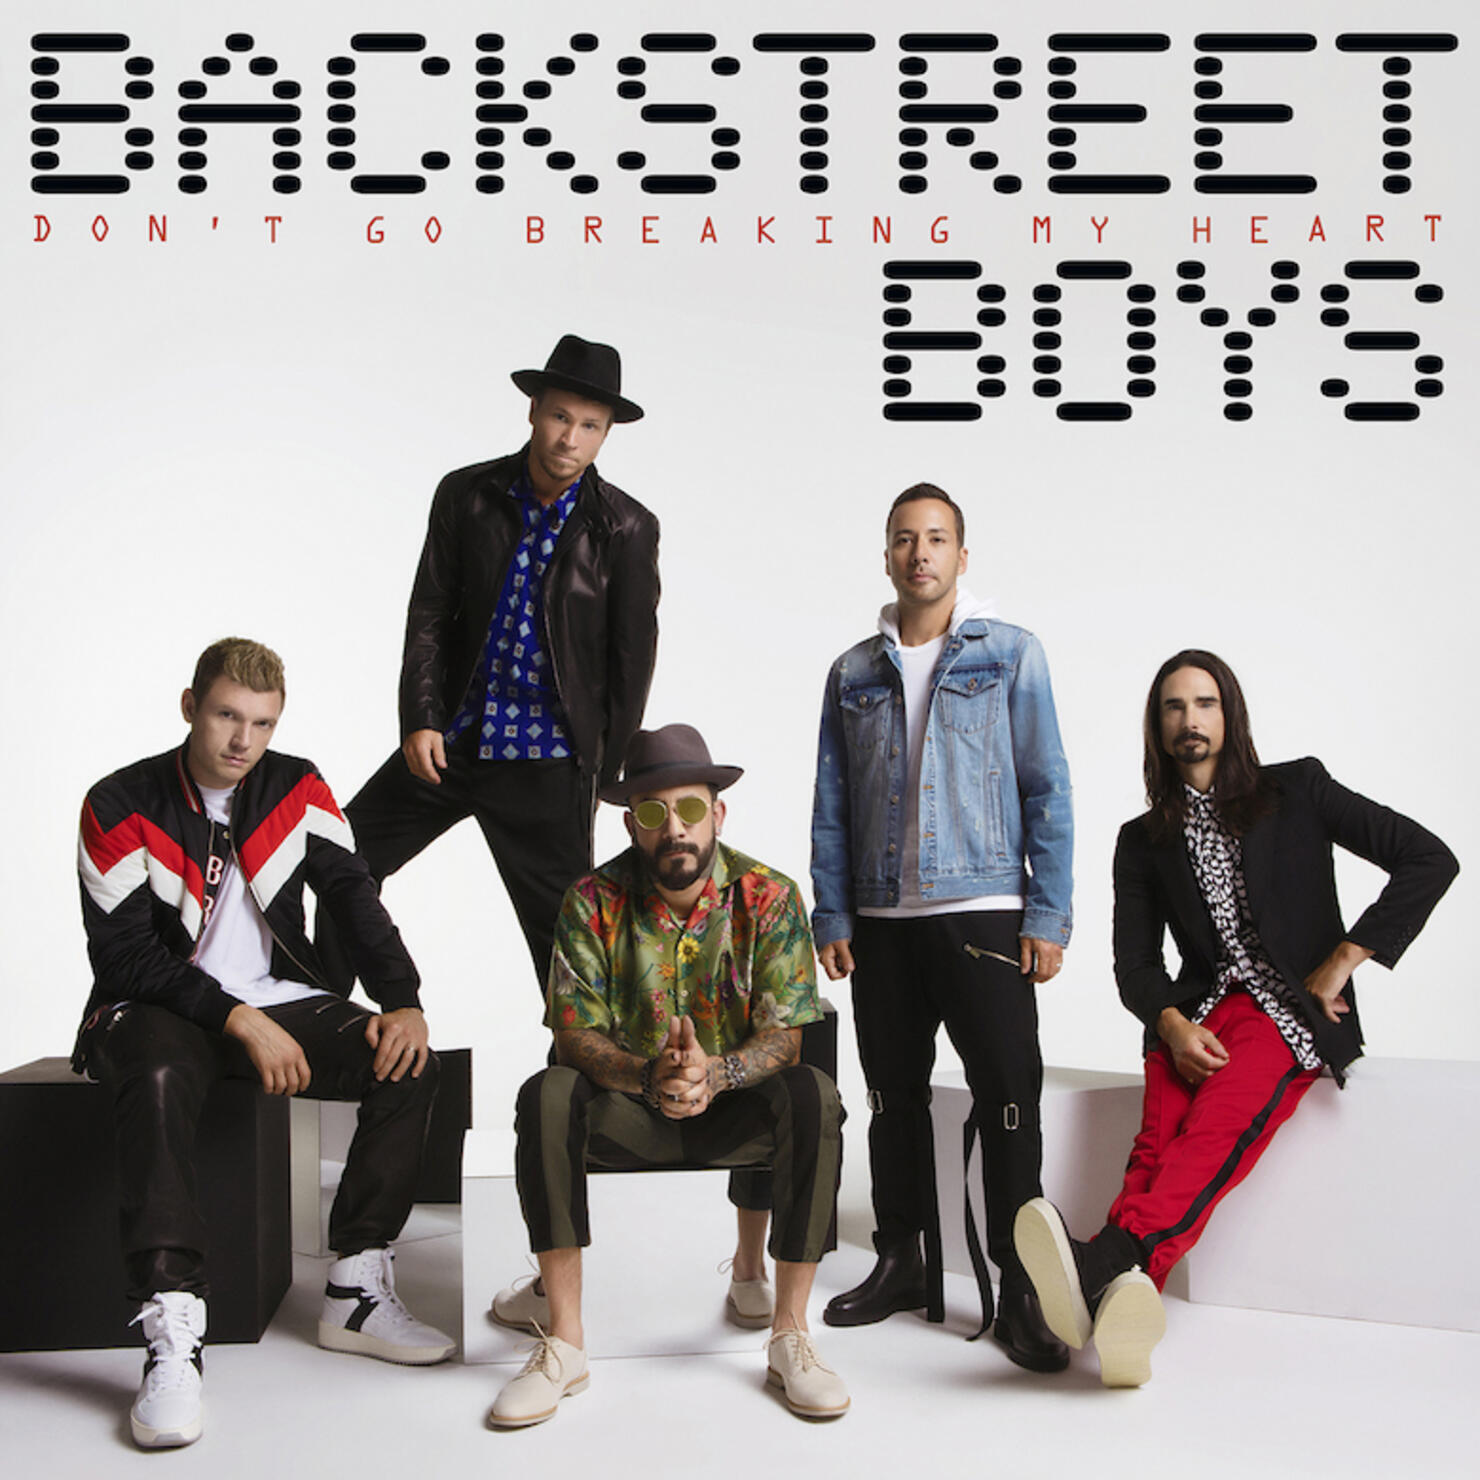 Backstreet Boys "Don't Go Breaking My Heart" Cover Art